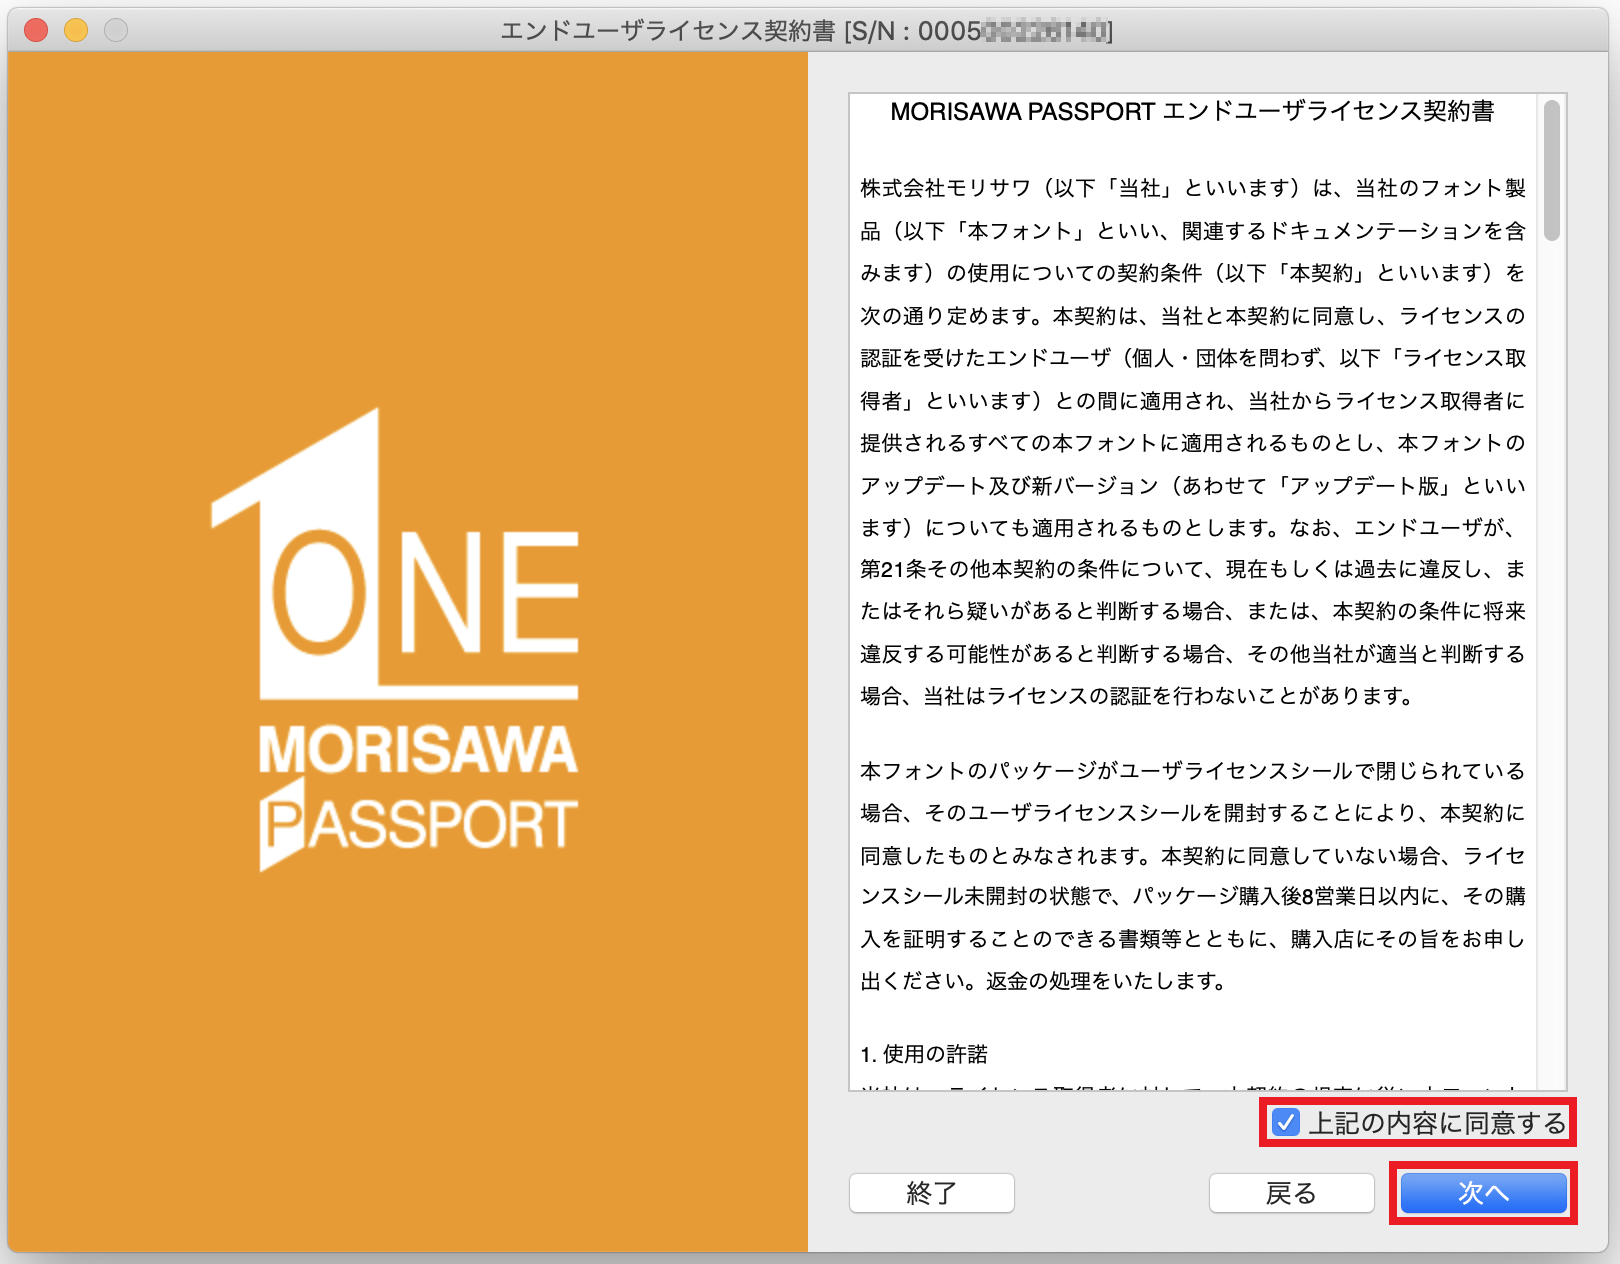 「MORISAWA PASSPORT ONE ソフトウェアカード」の導入方法 